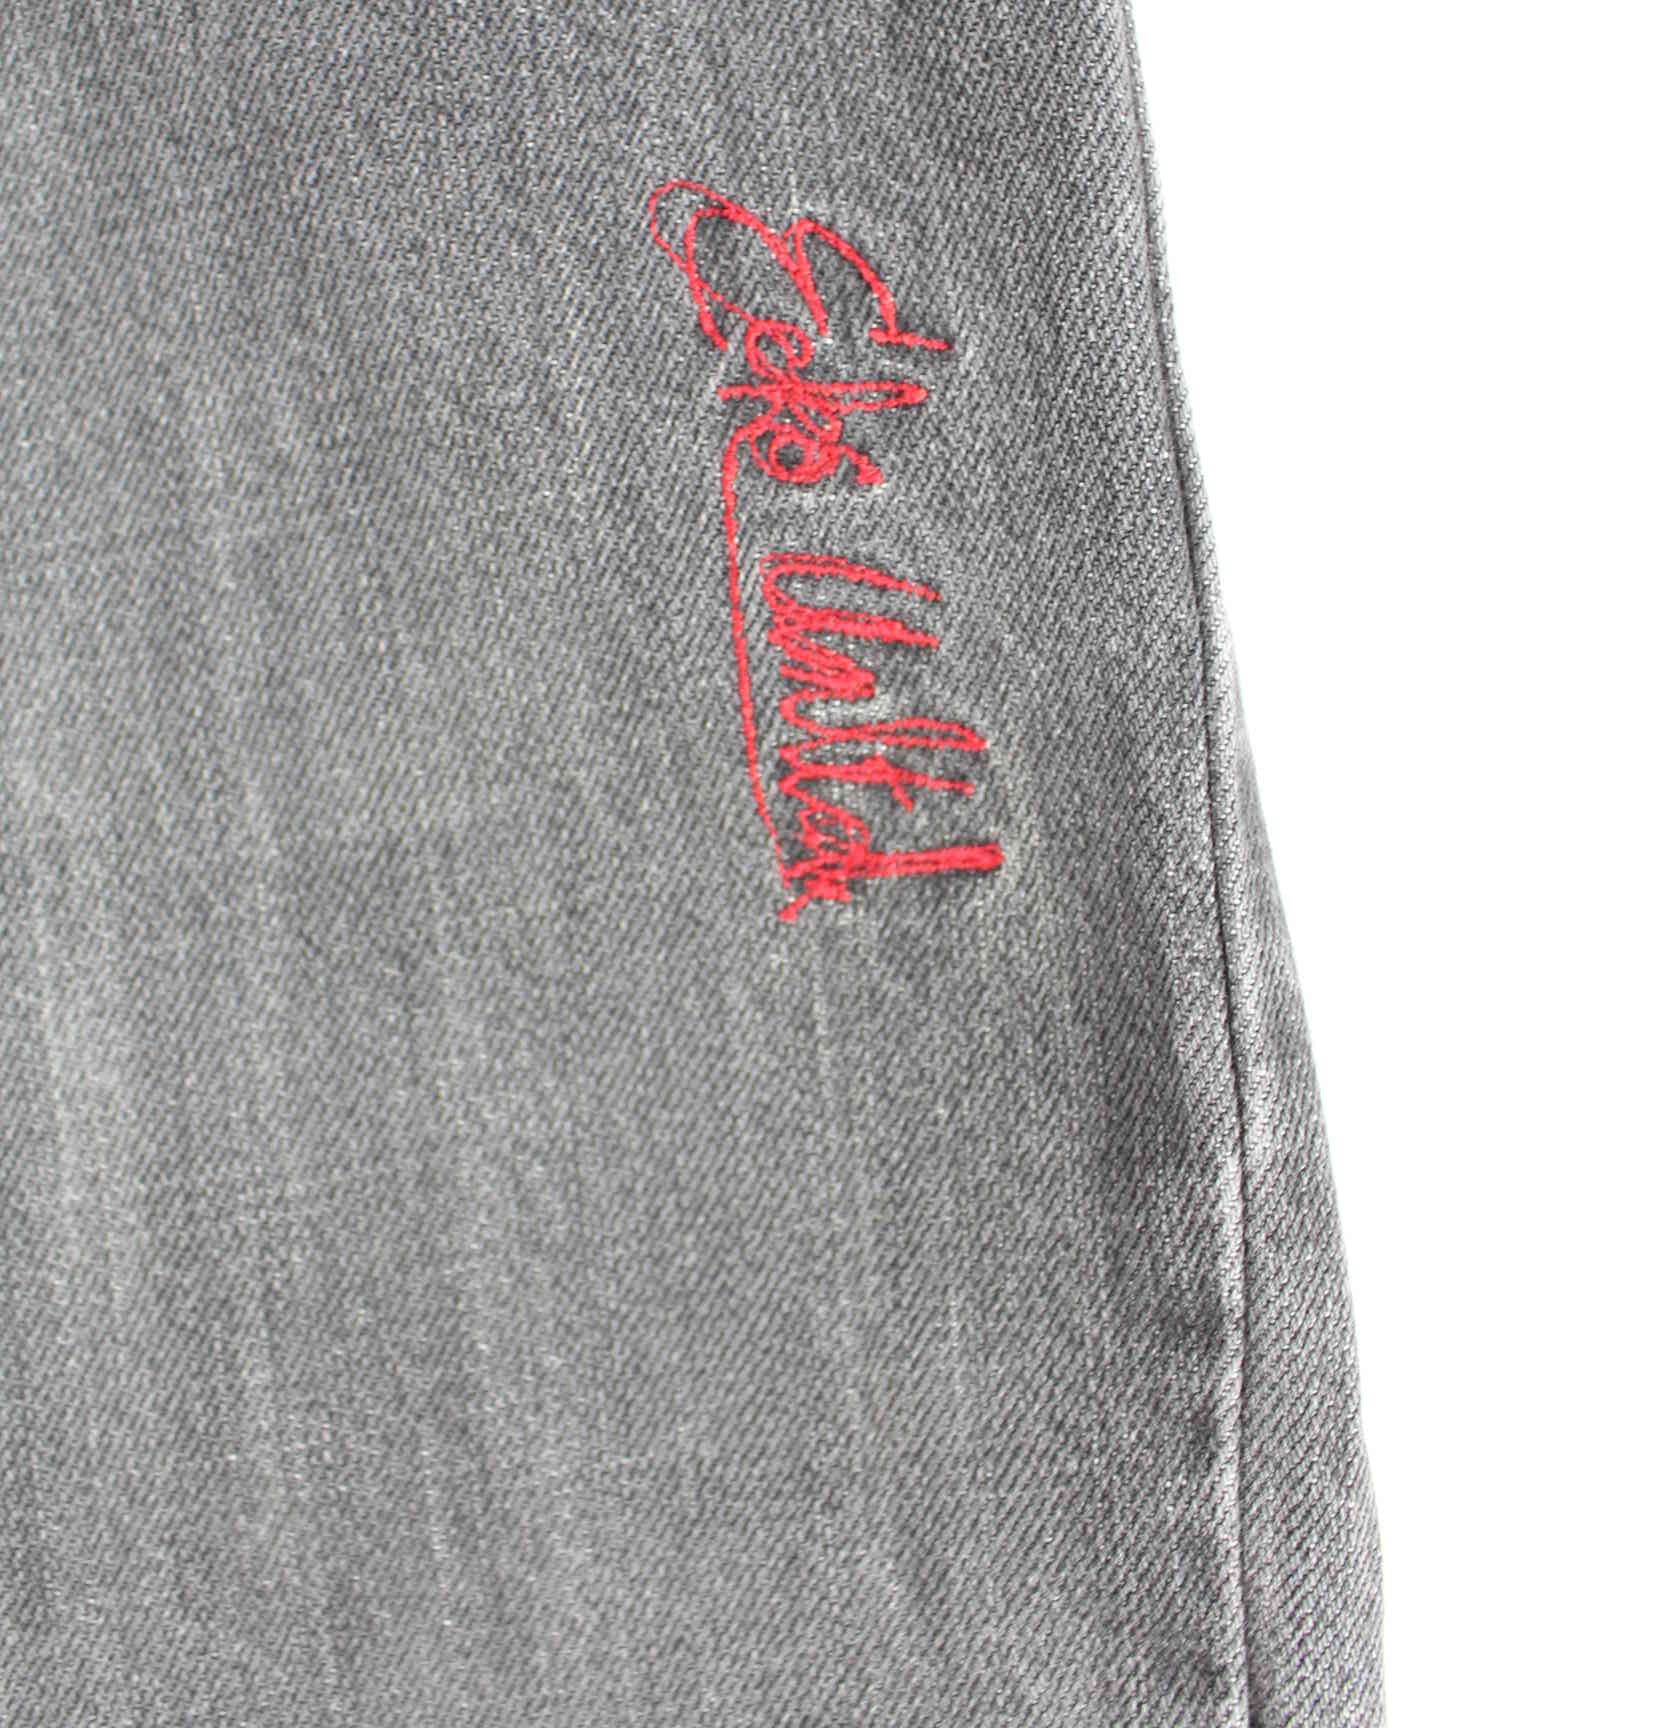 Ecko y2k Embroidered Jeans Grau W28 L30 (detail image 2)